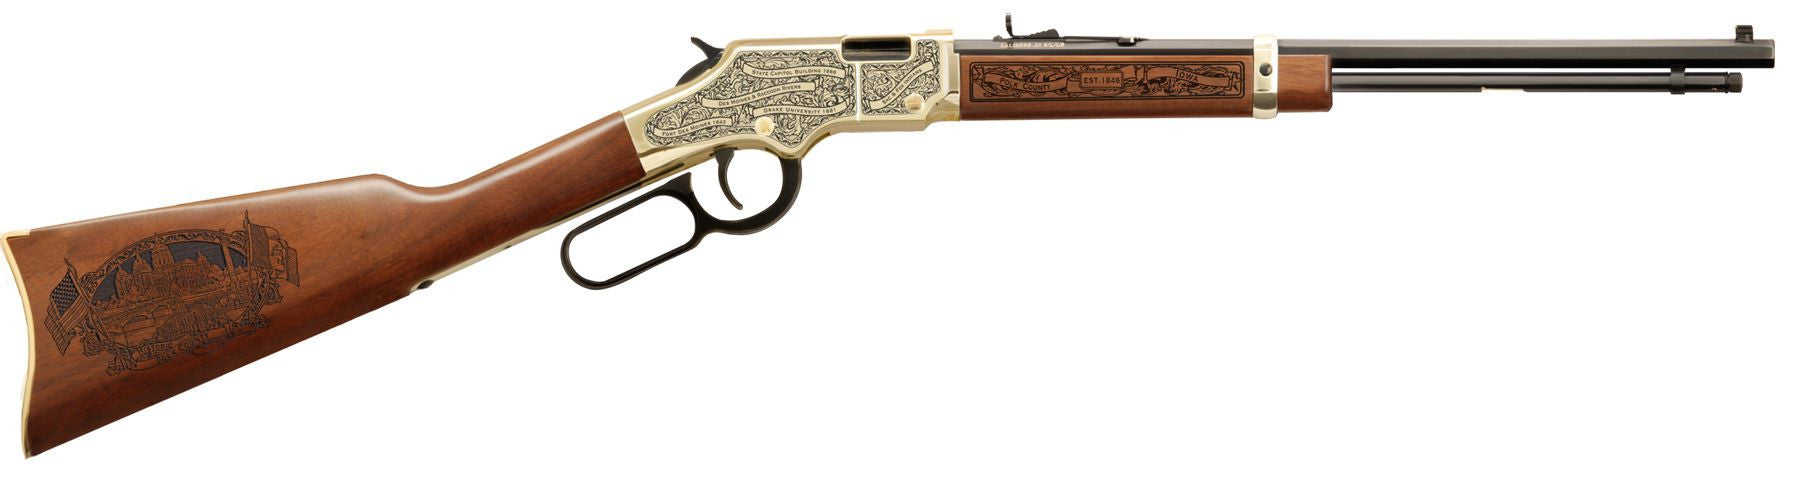 Polk county iowa engraved rifle H004